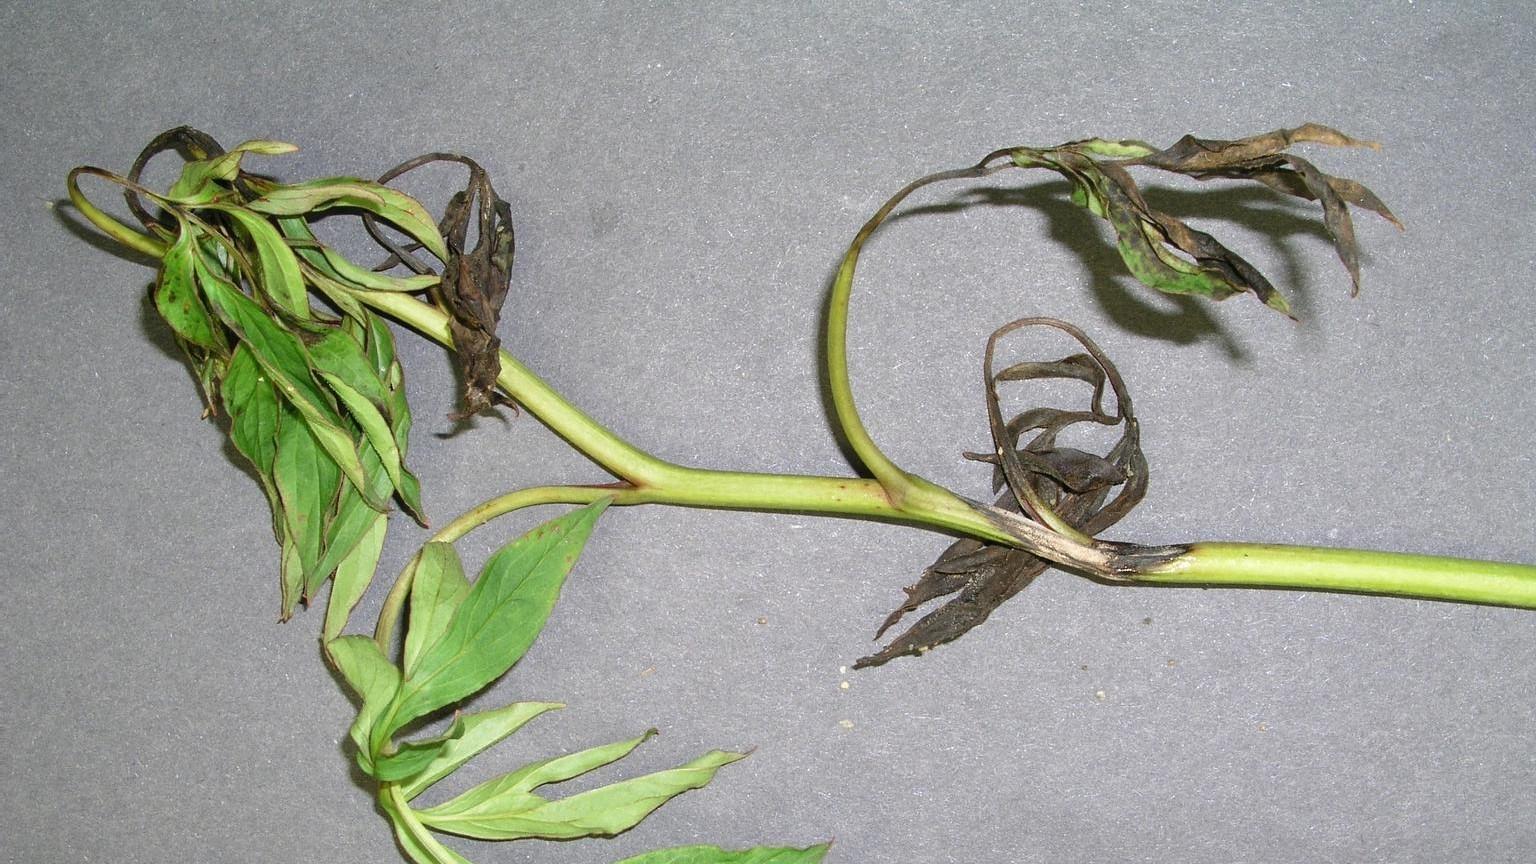 blackened stems of peony - anthracnose symptoms